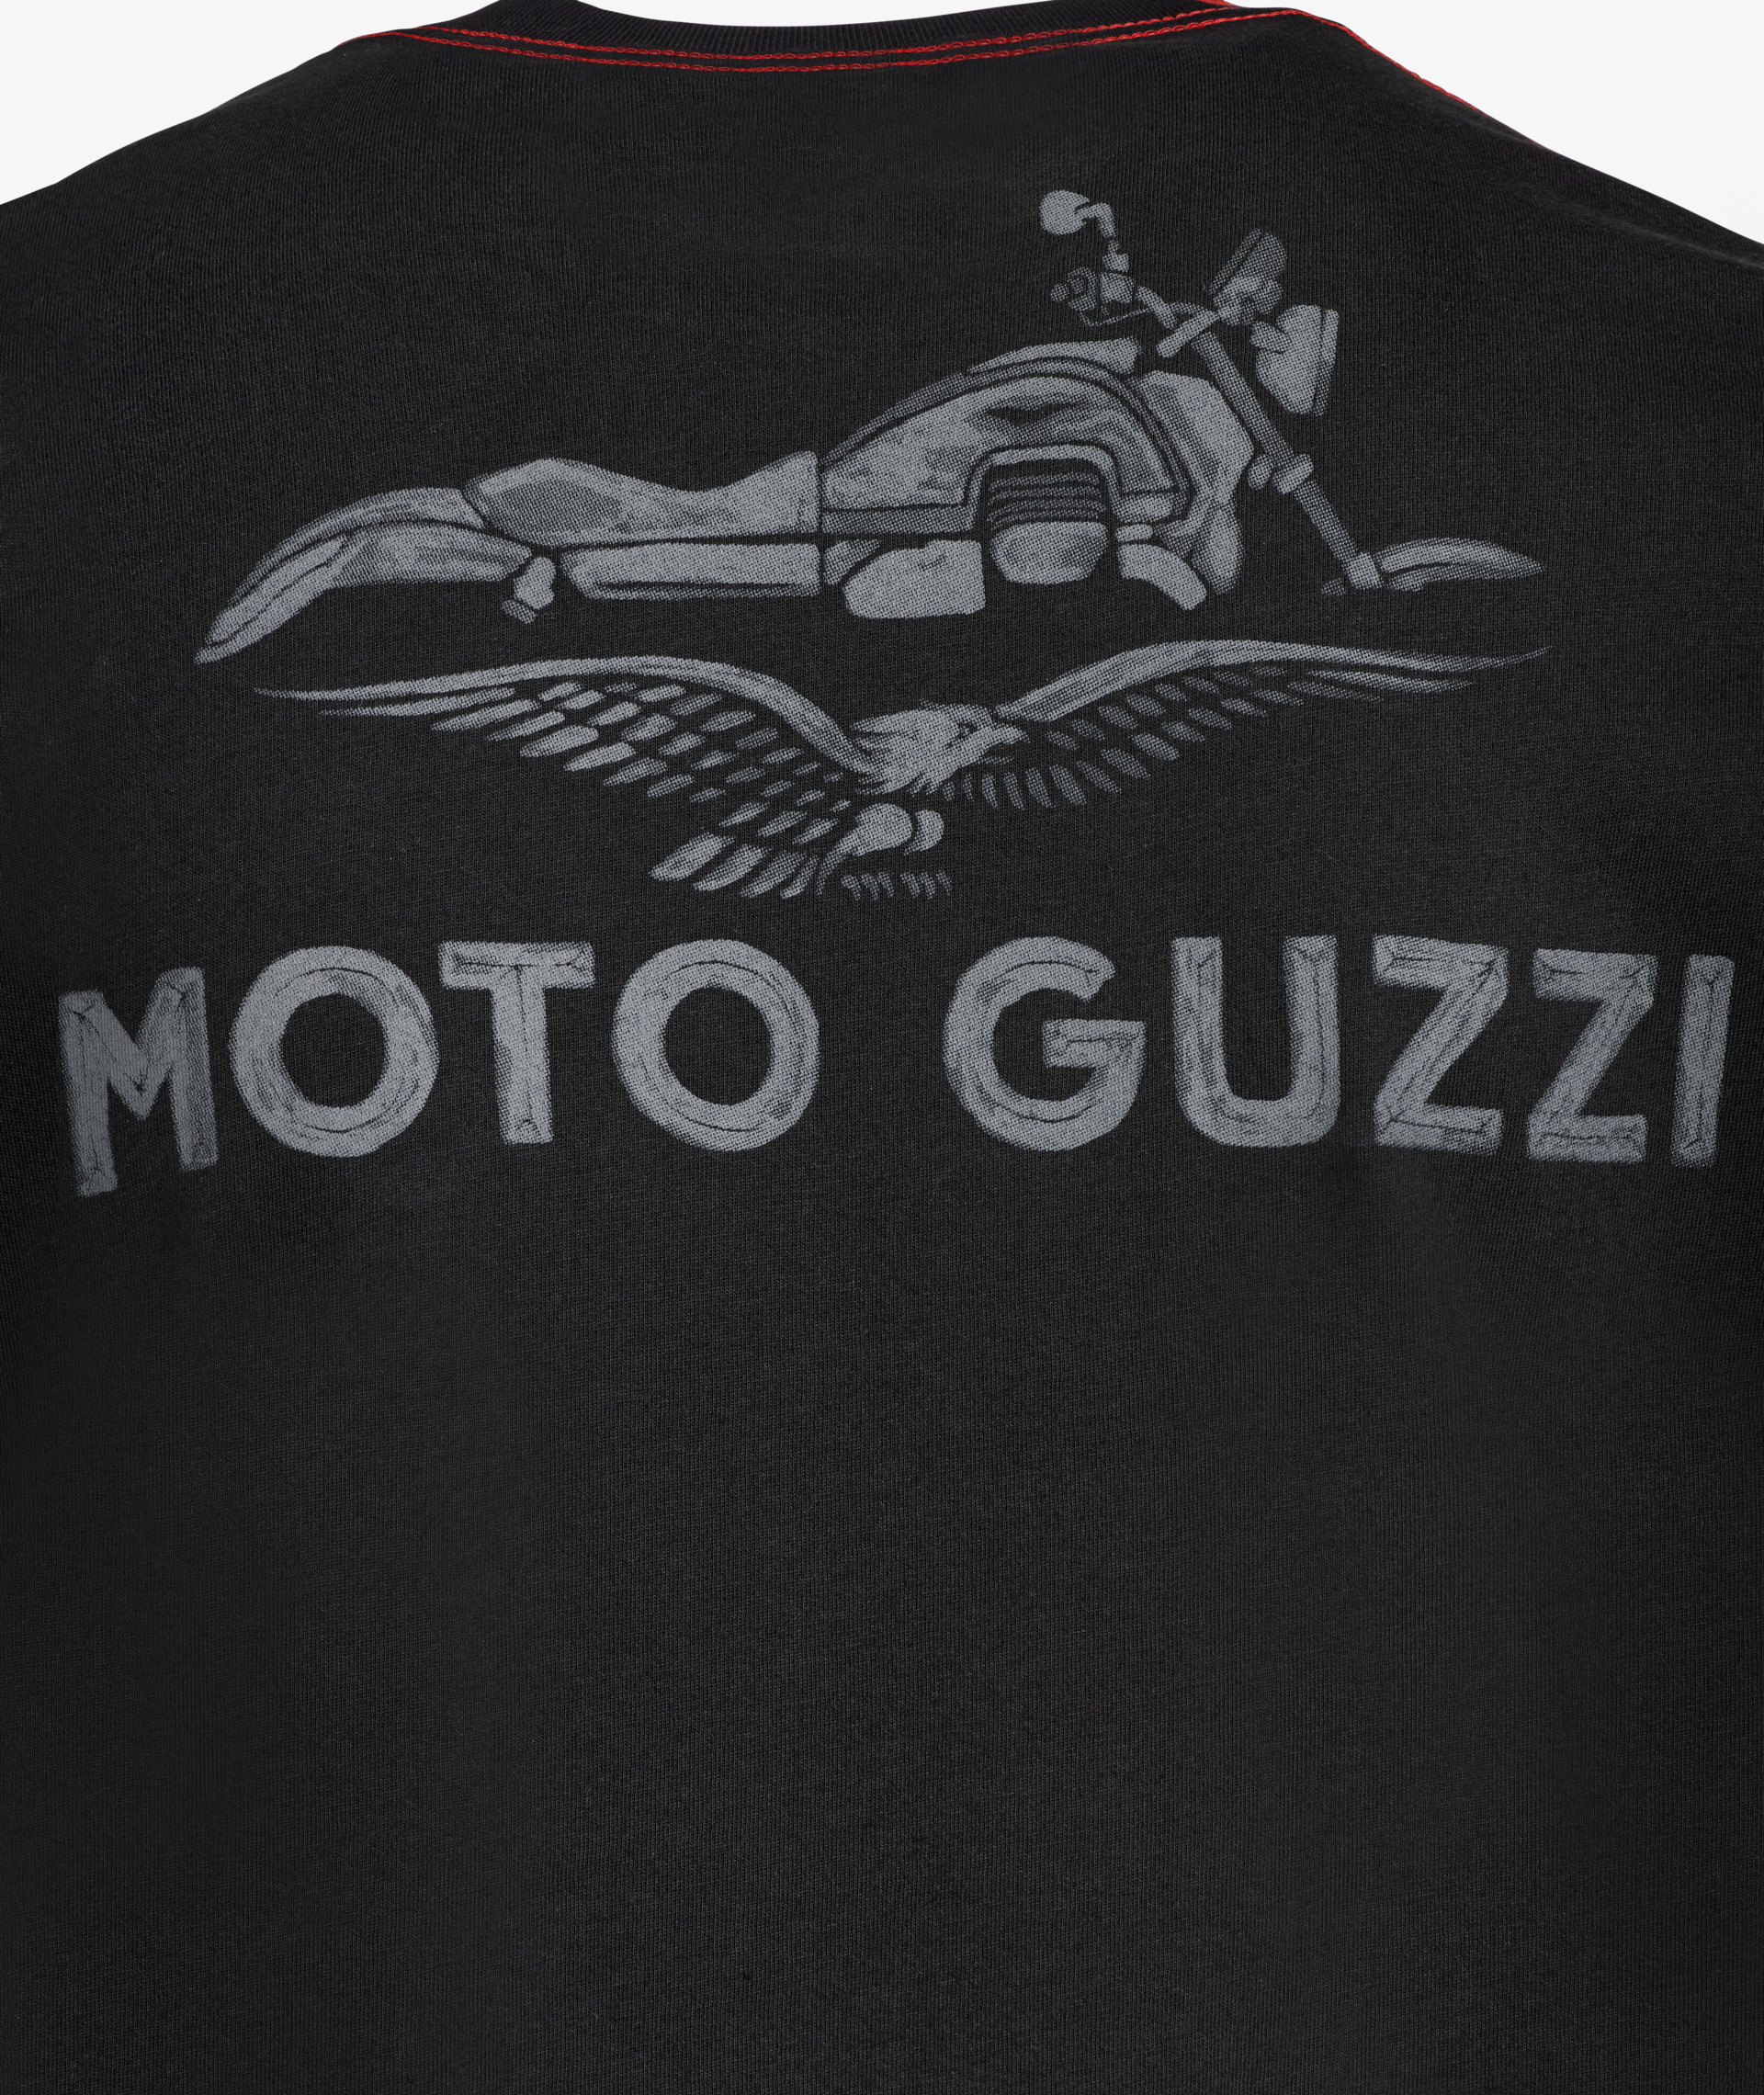 Moto Guzzi T Shirt For Sale